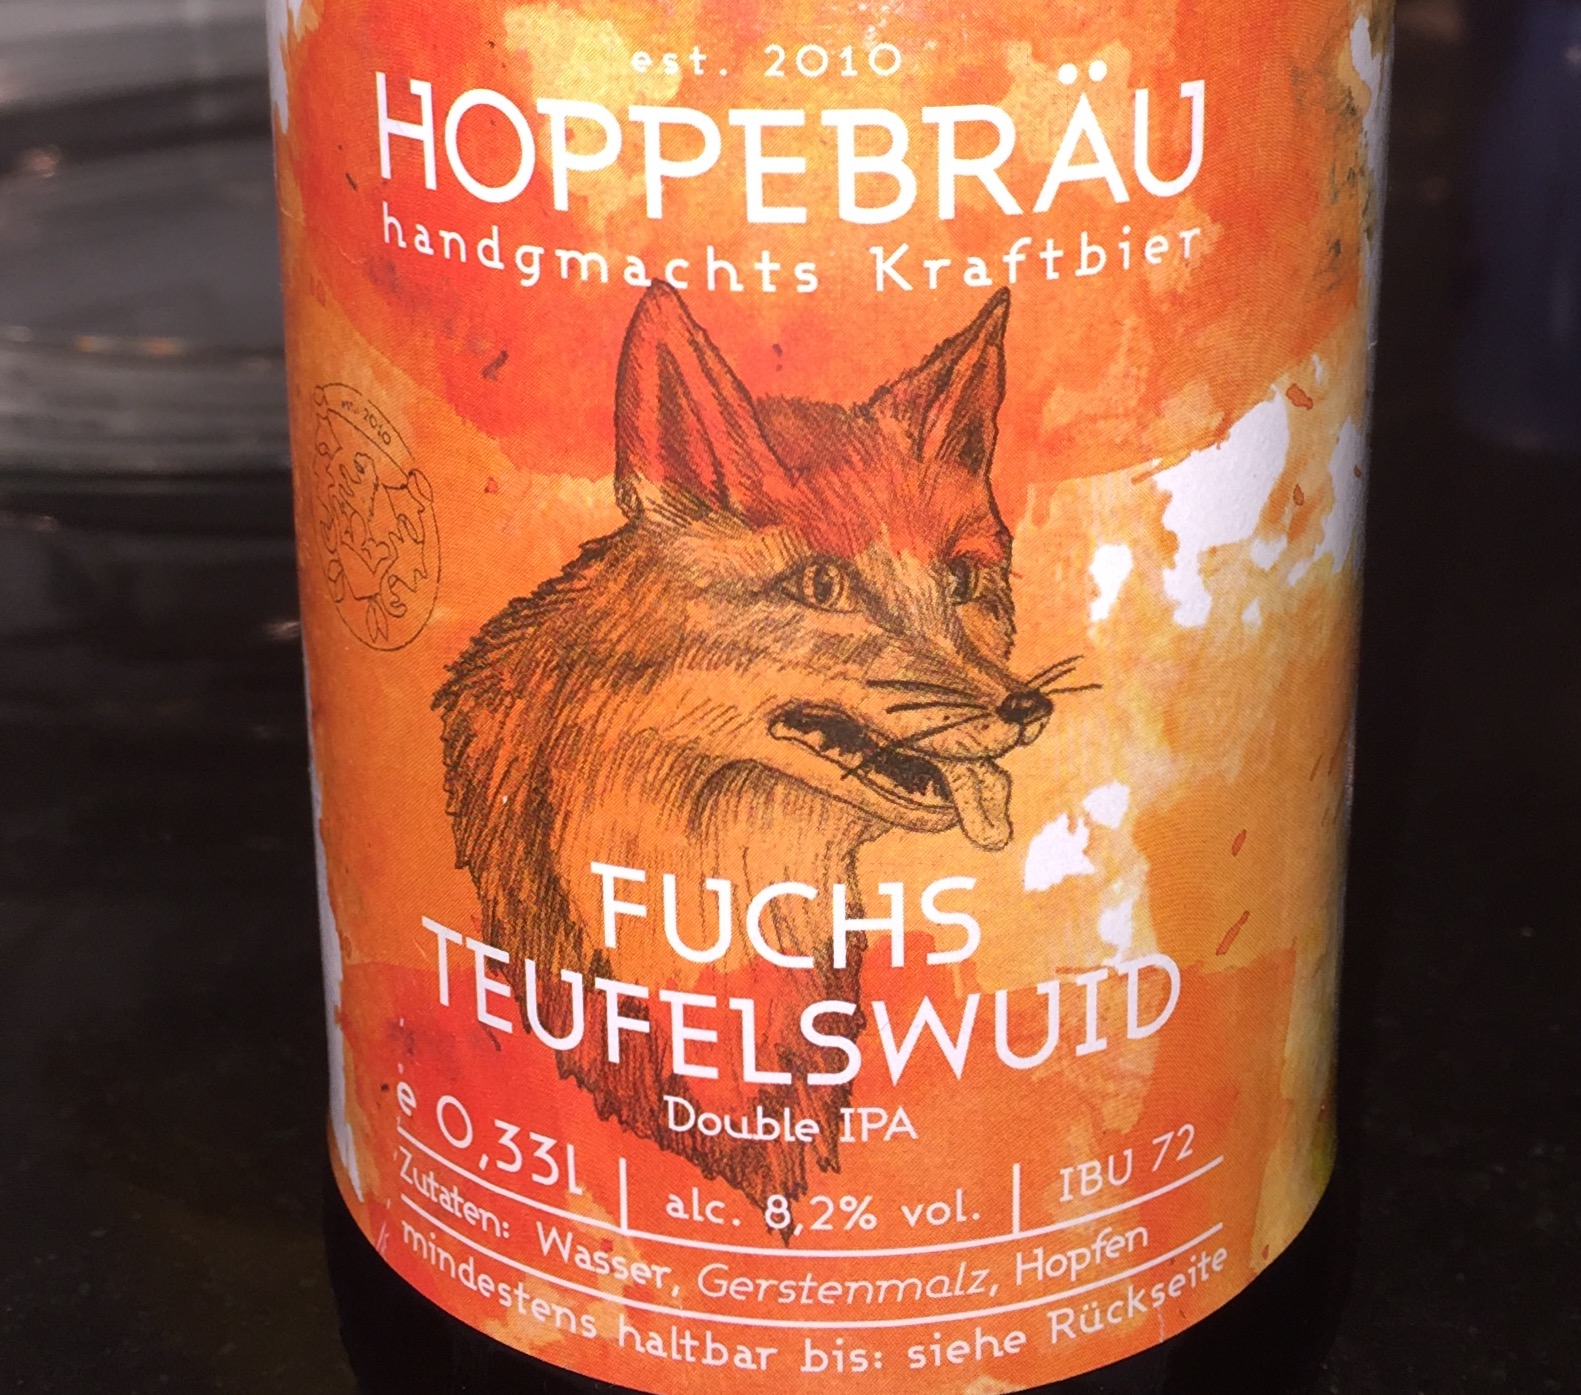 Hoppebräu - Fuchs Teufelwuid